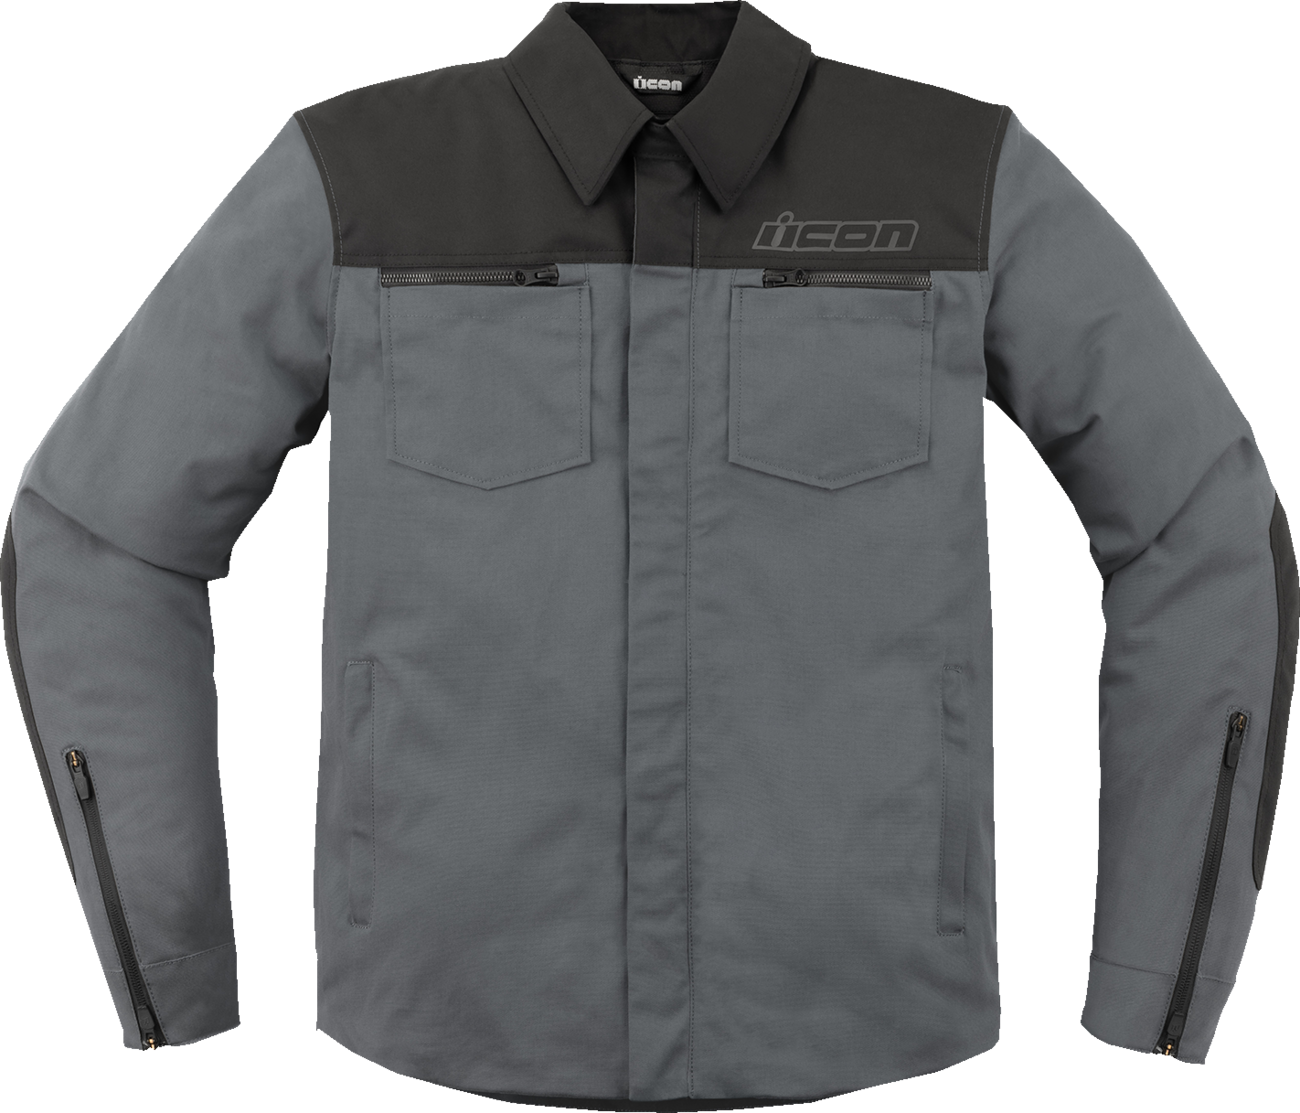 ICON Upstate Canvas CE Jacket - Gray - Large 2820-6243